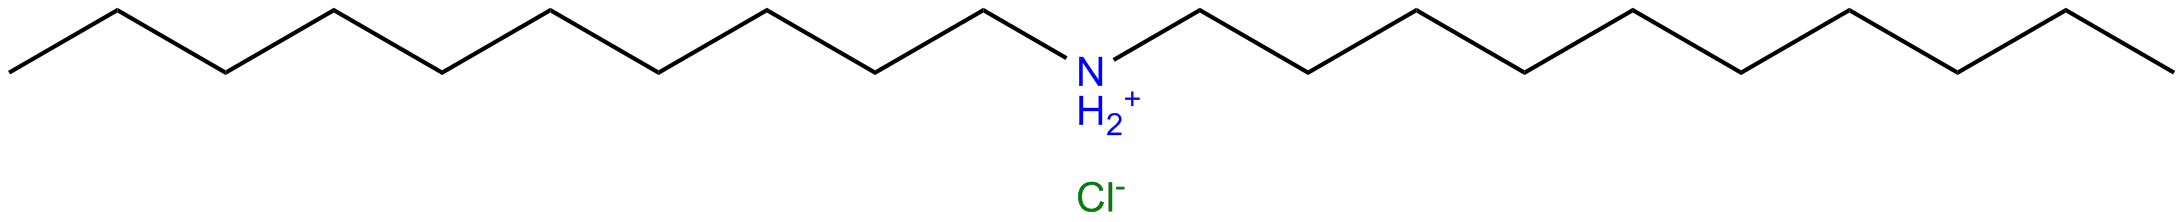 Image of didecylammonium chloride